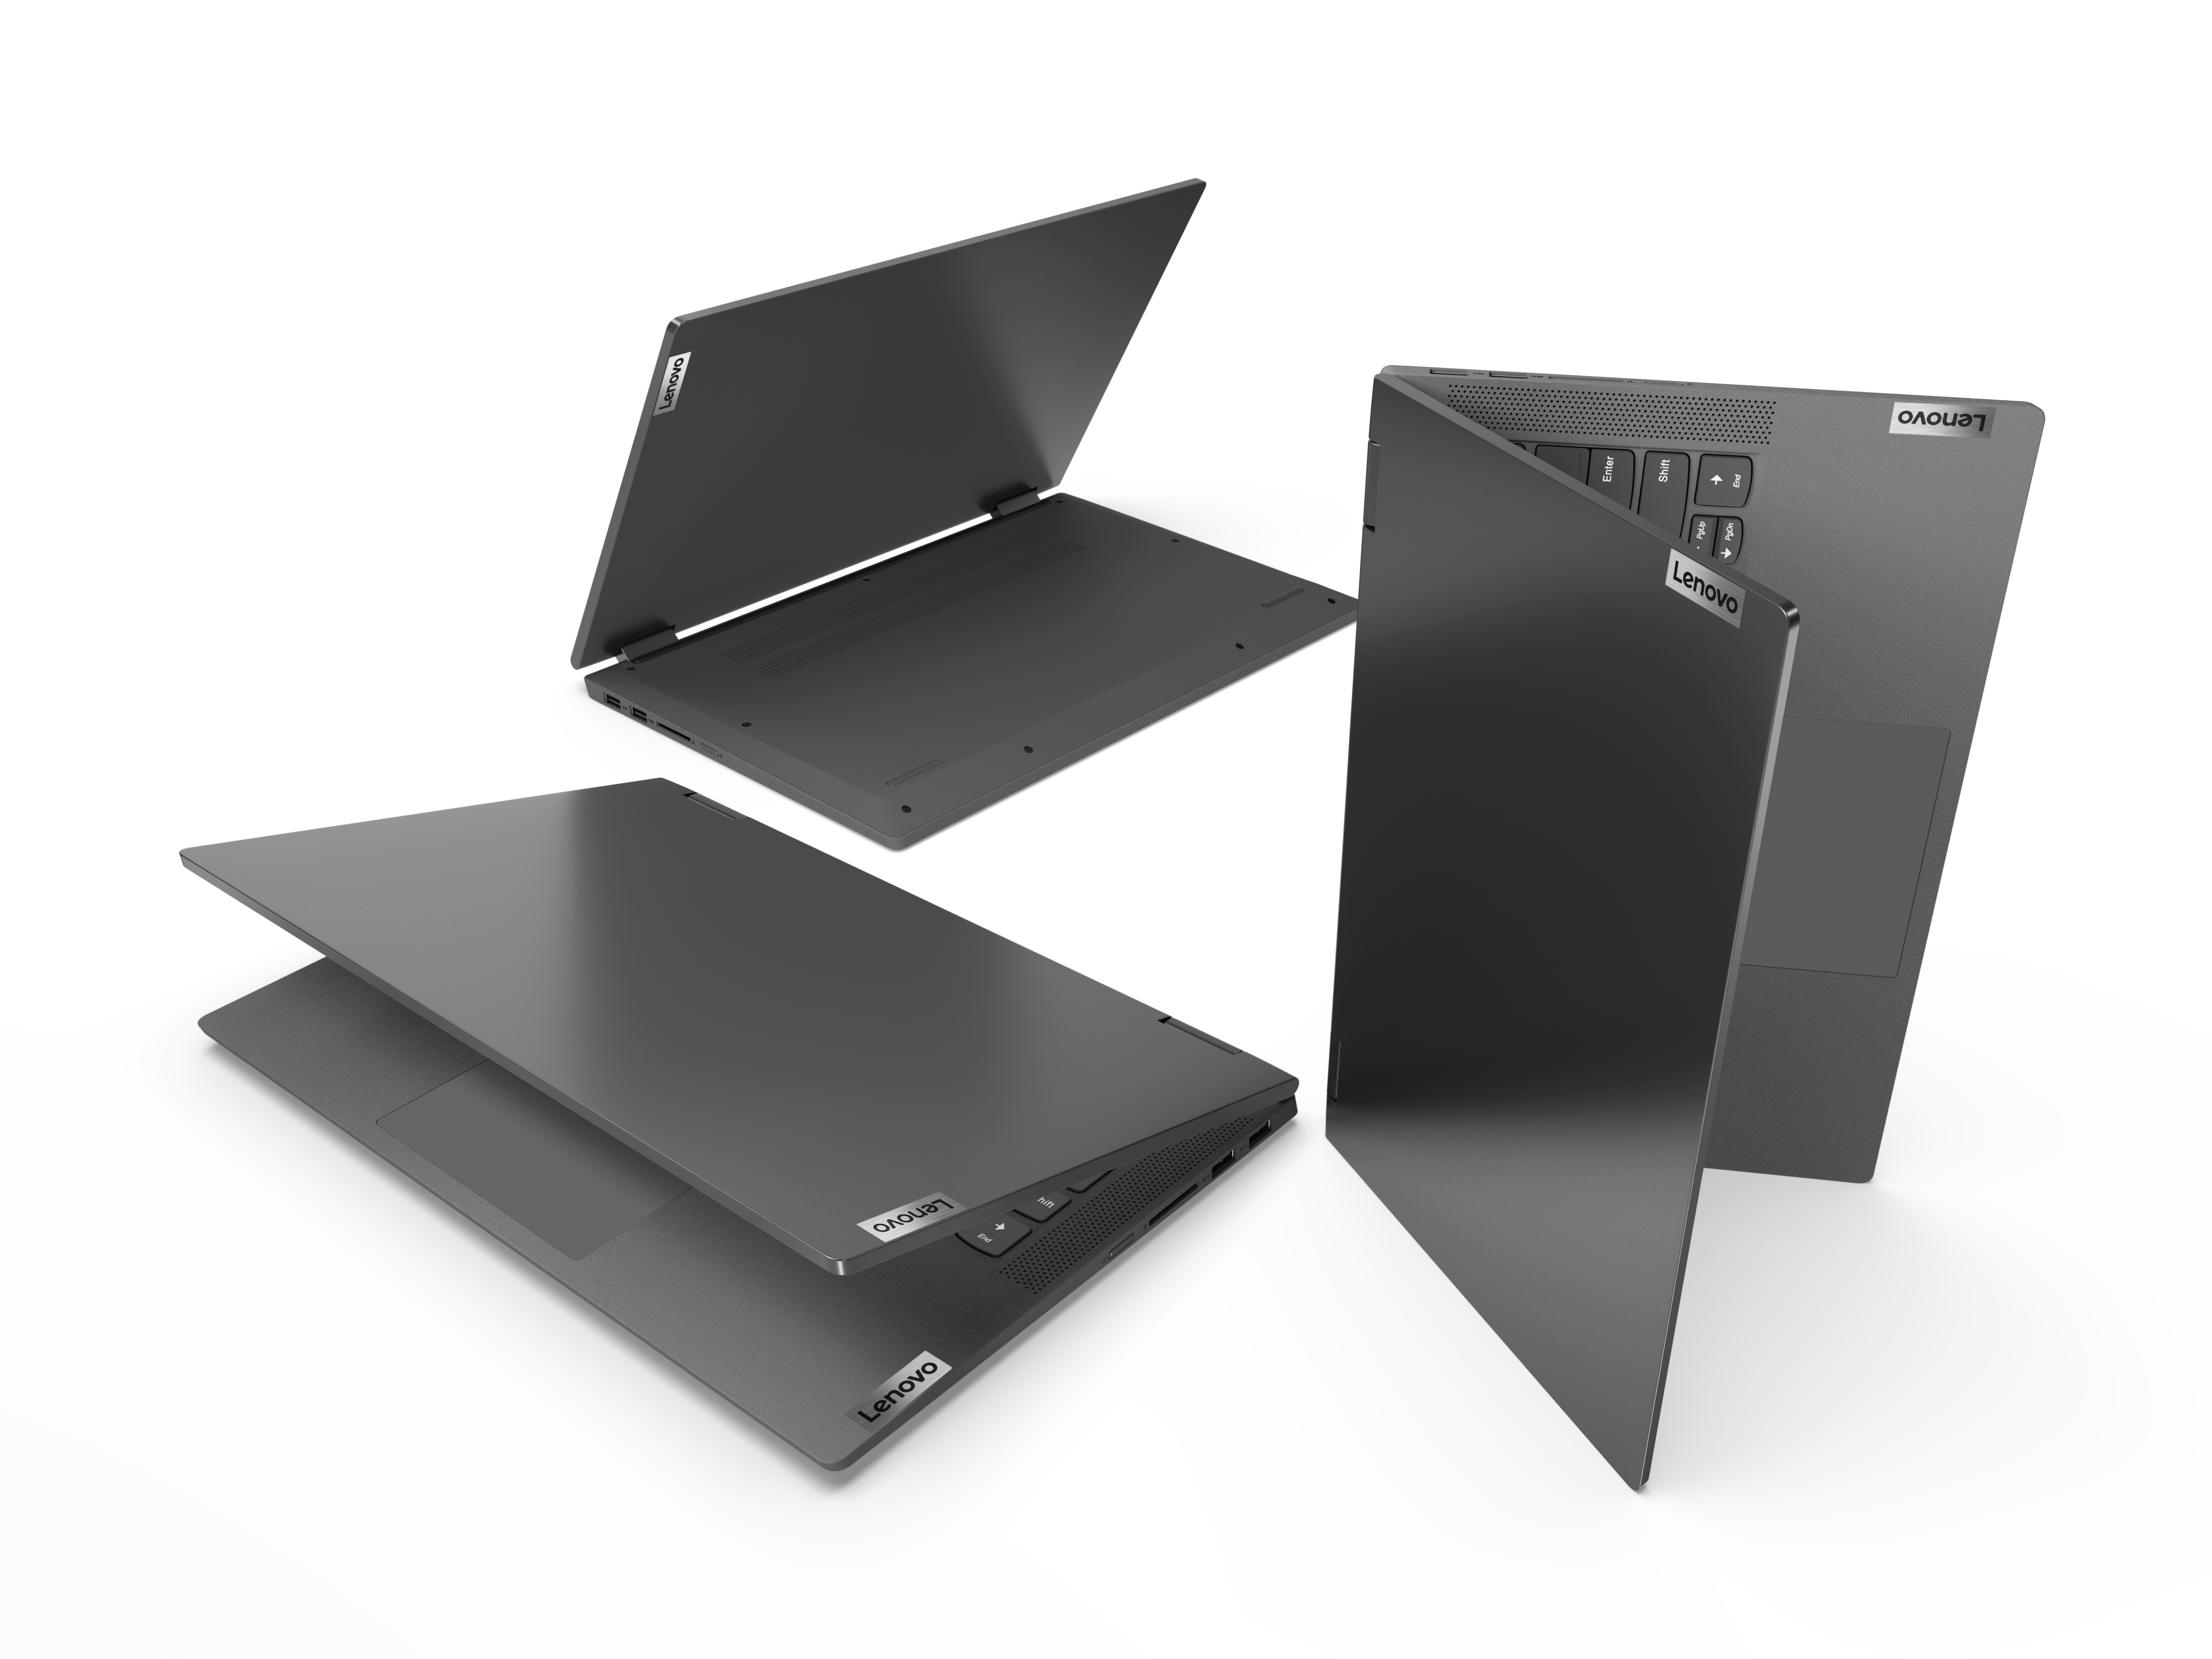 Lenovo IdeaPad Flex 5 14" FHD 2-in-1 Touchscreen Laptop, AMD Ryzen 3 4300U, 4GB RAM, 128GB SSD, Graphite Grey, Windows 10S, 81X2000HUS - image 4 of 18